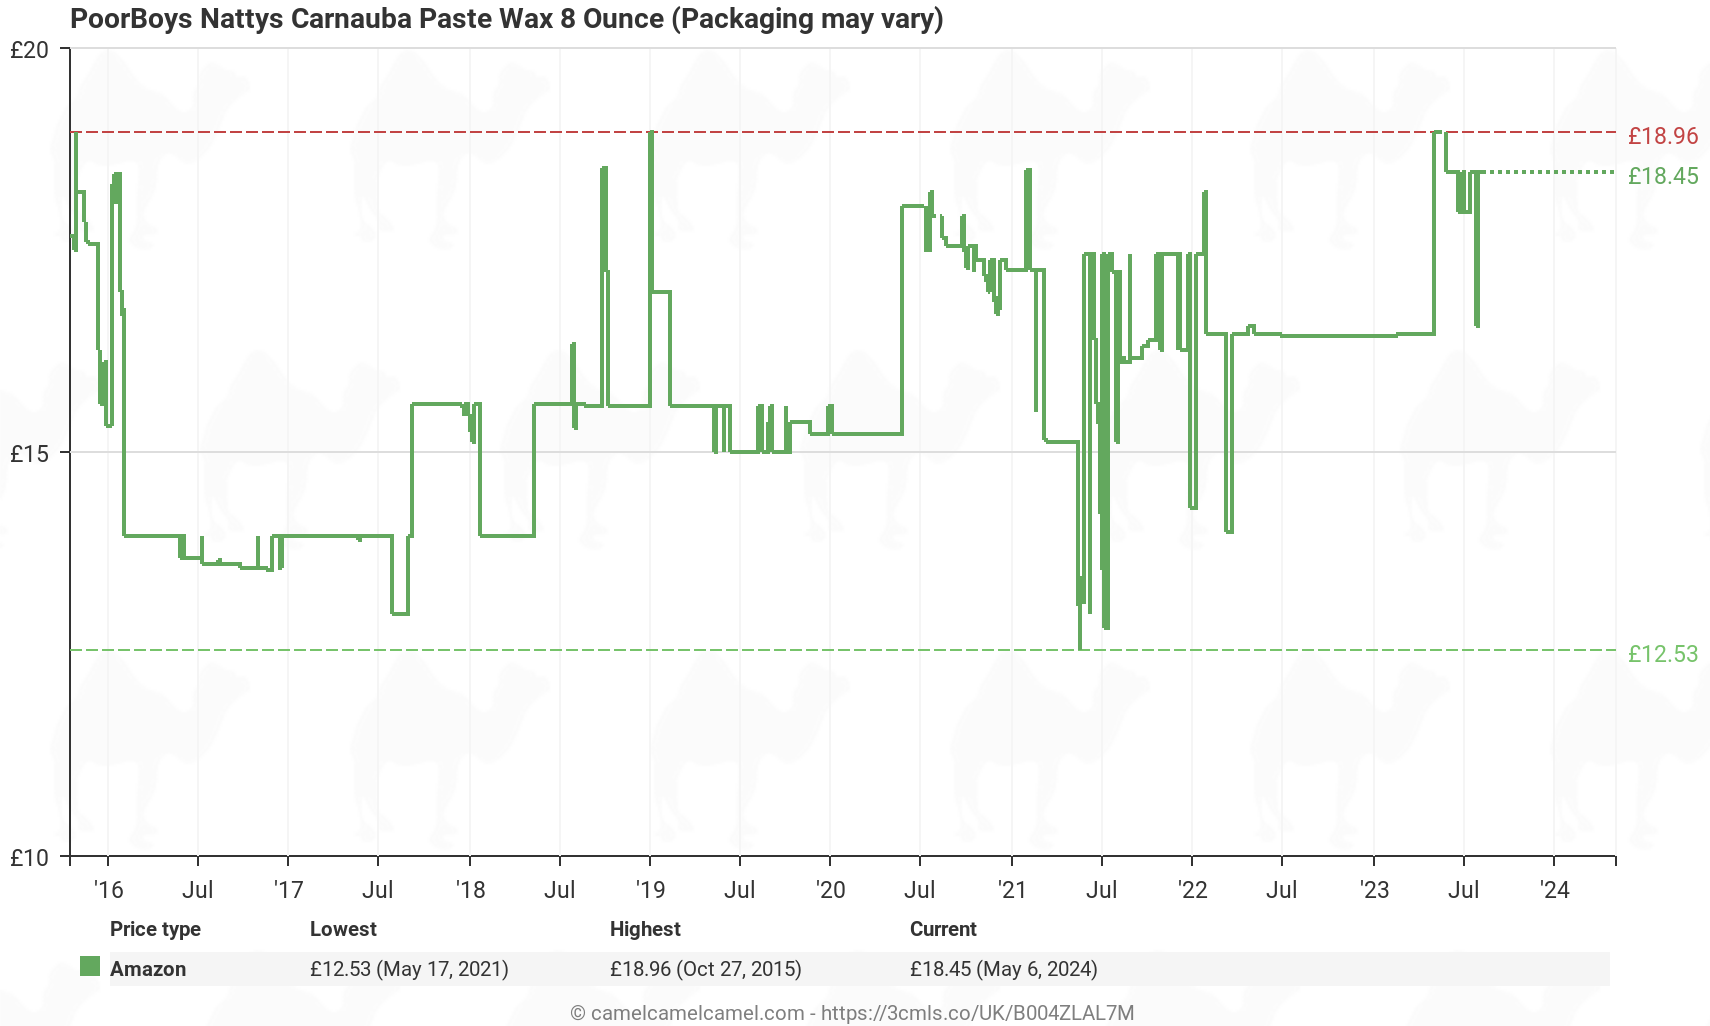 PoorBoys PB-NP08 Nattys Carnauba Paste Wax 8 Ounce - Price History: B004ZLAL7M